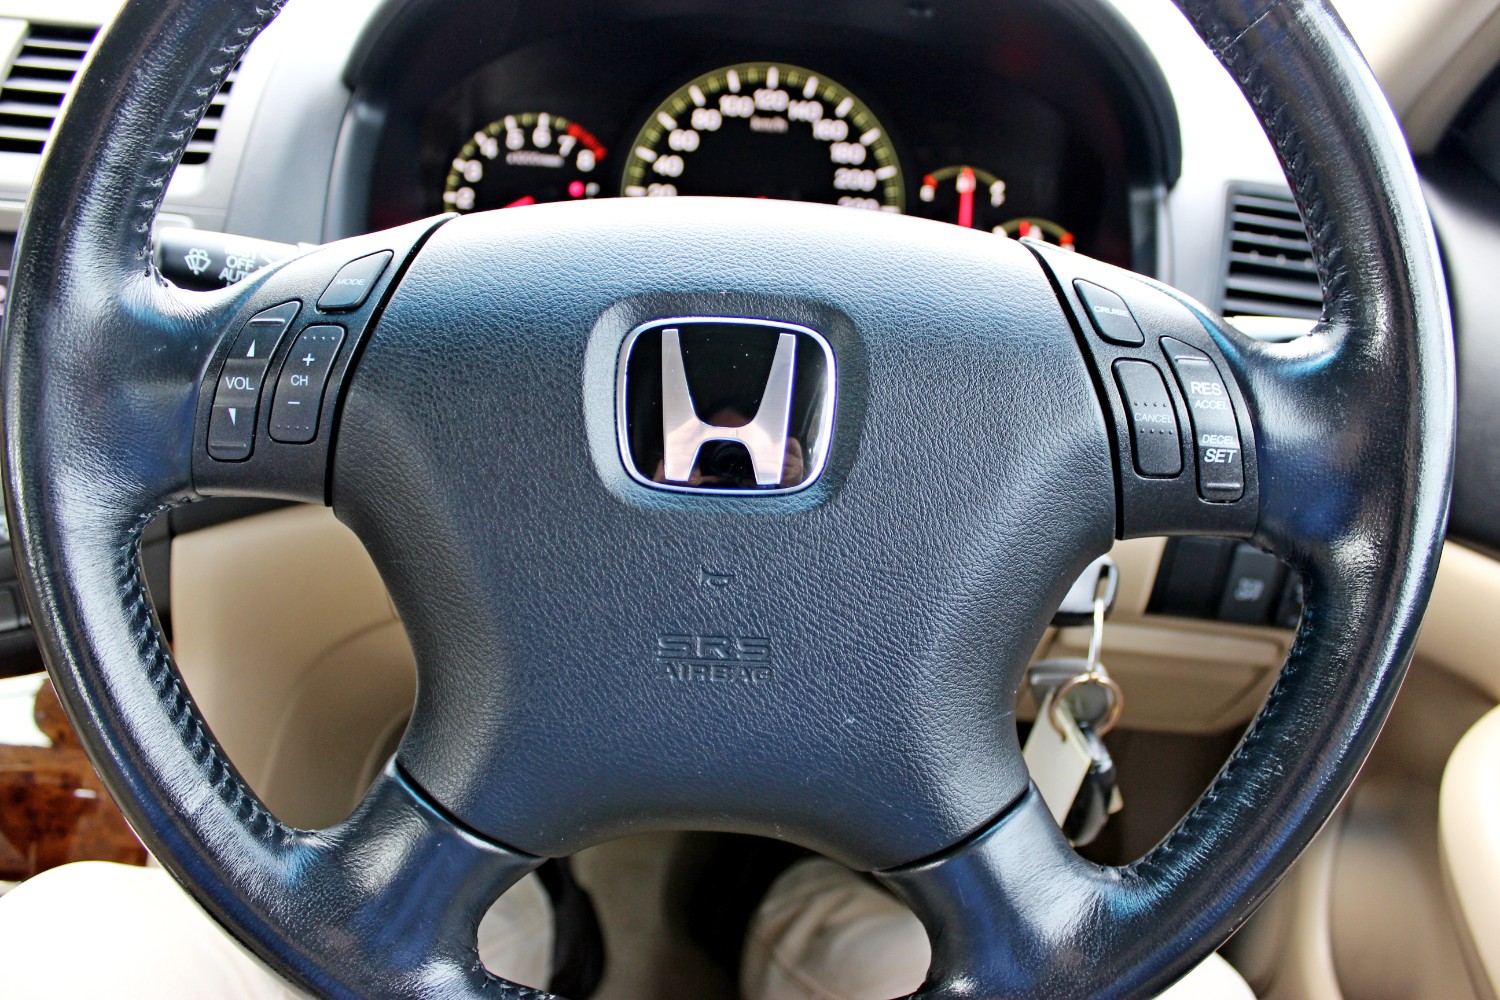 2005 Honda Accord 7th Gen V6 V6 - Luxury Sedan Image 19